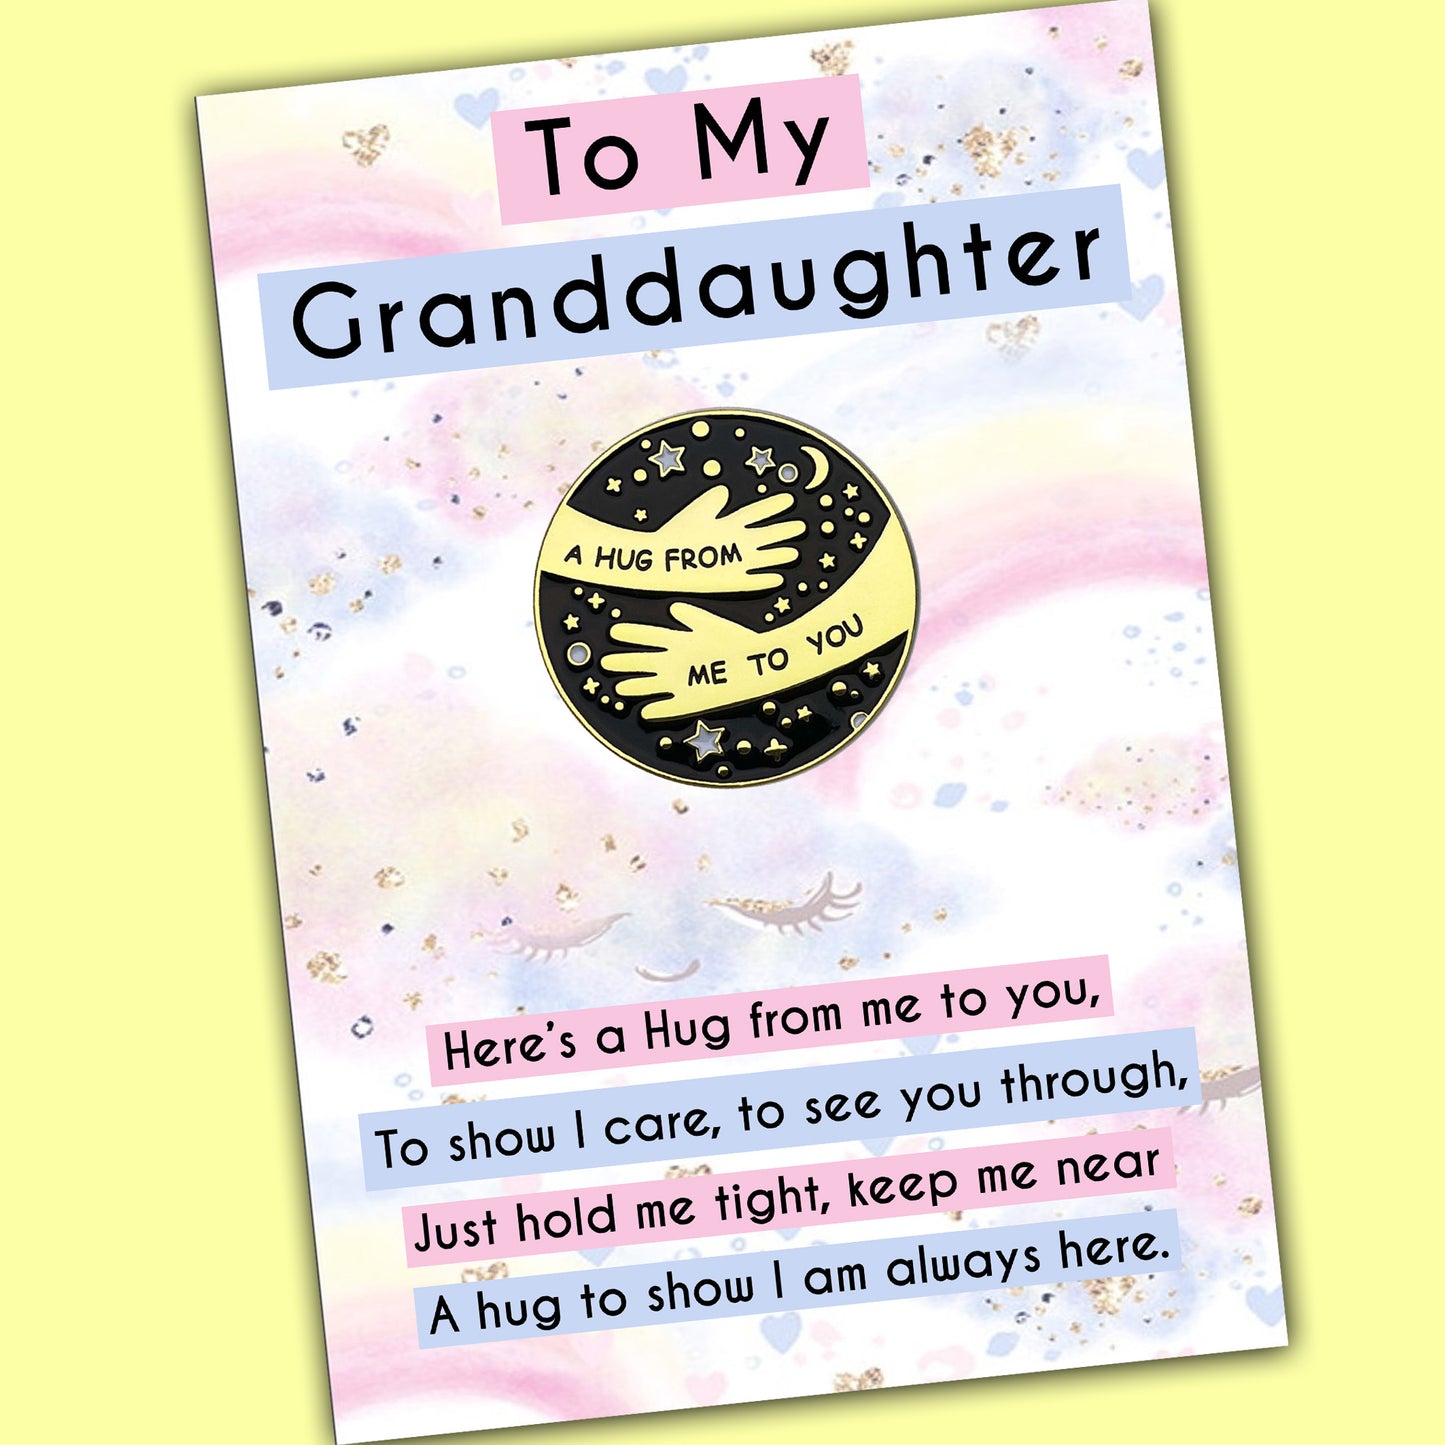 Granddaughter Pocket Hug Pin Badges & Candy Cloud Message Cards